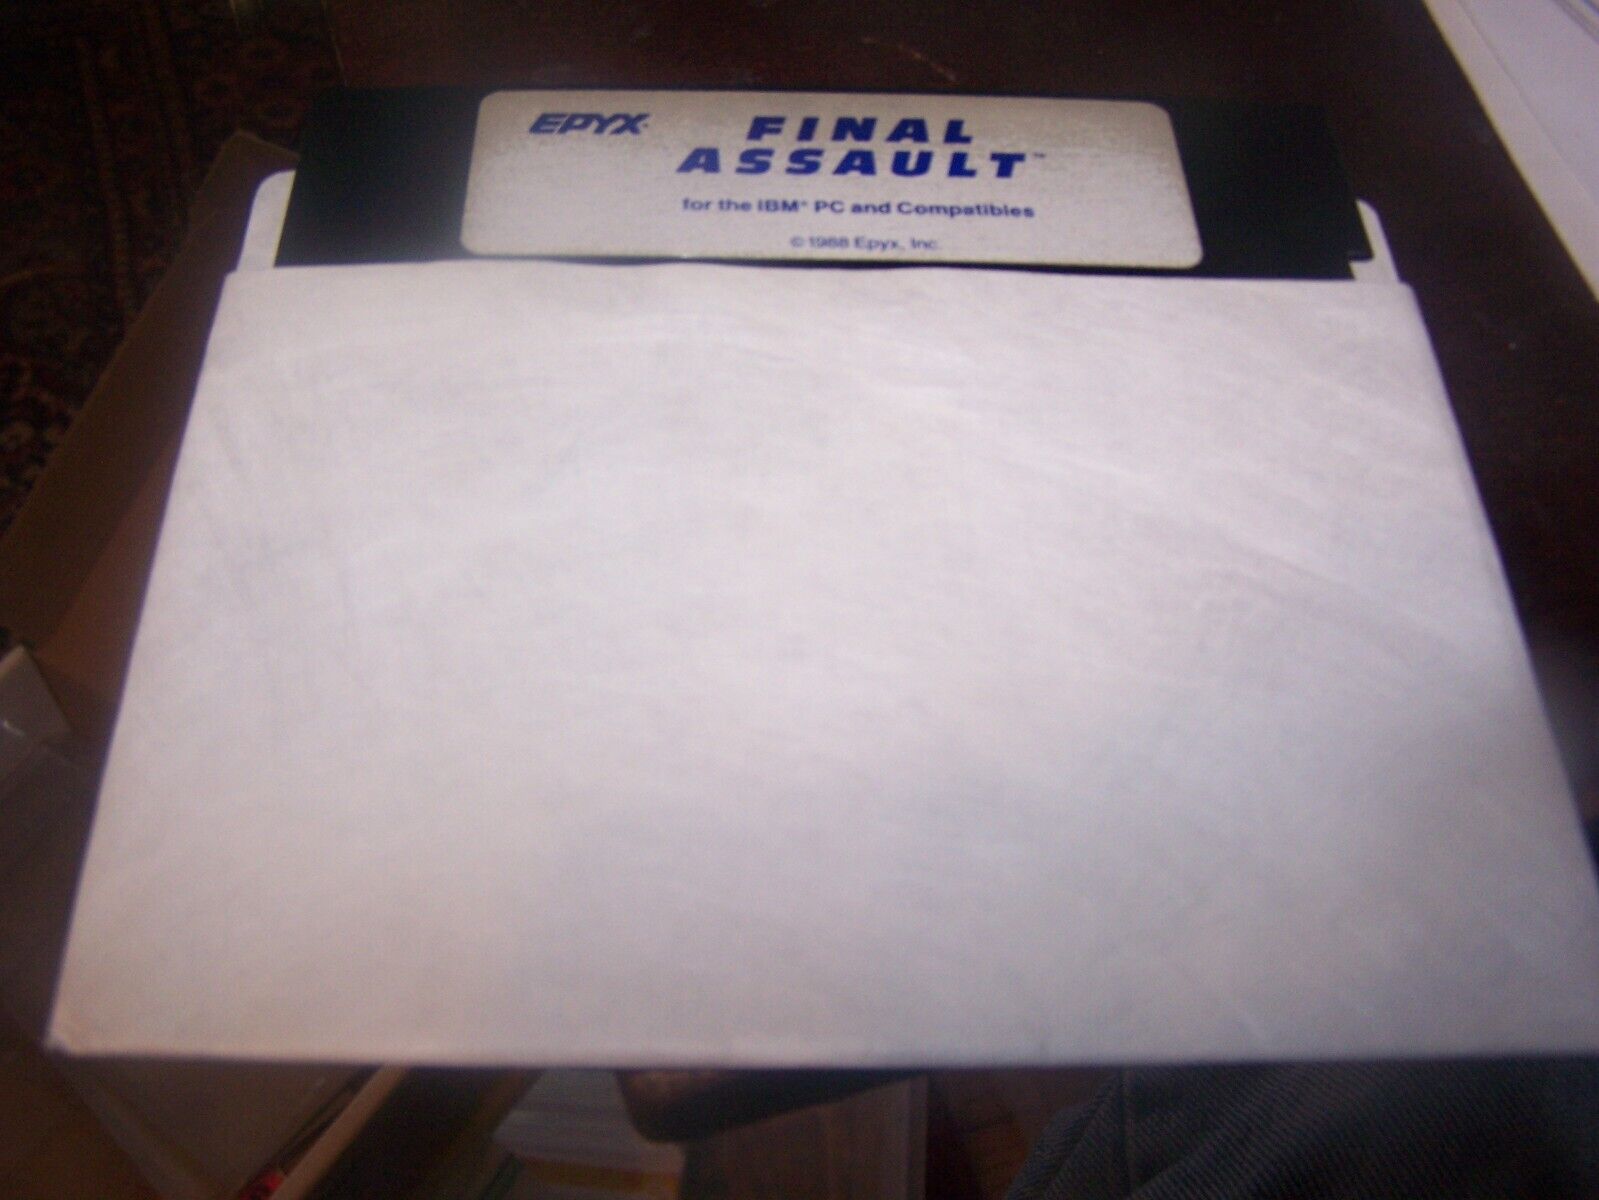 Vintage EPYX Final Assault Game for IBM PC and Compatibles - 1988